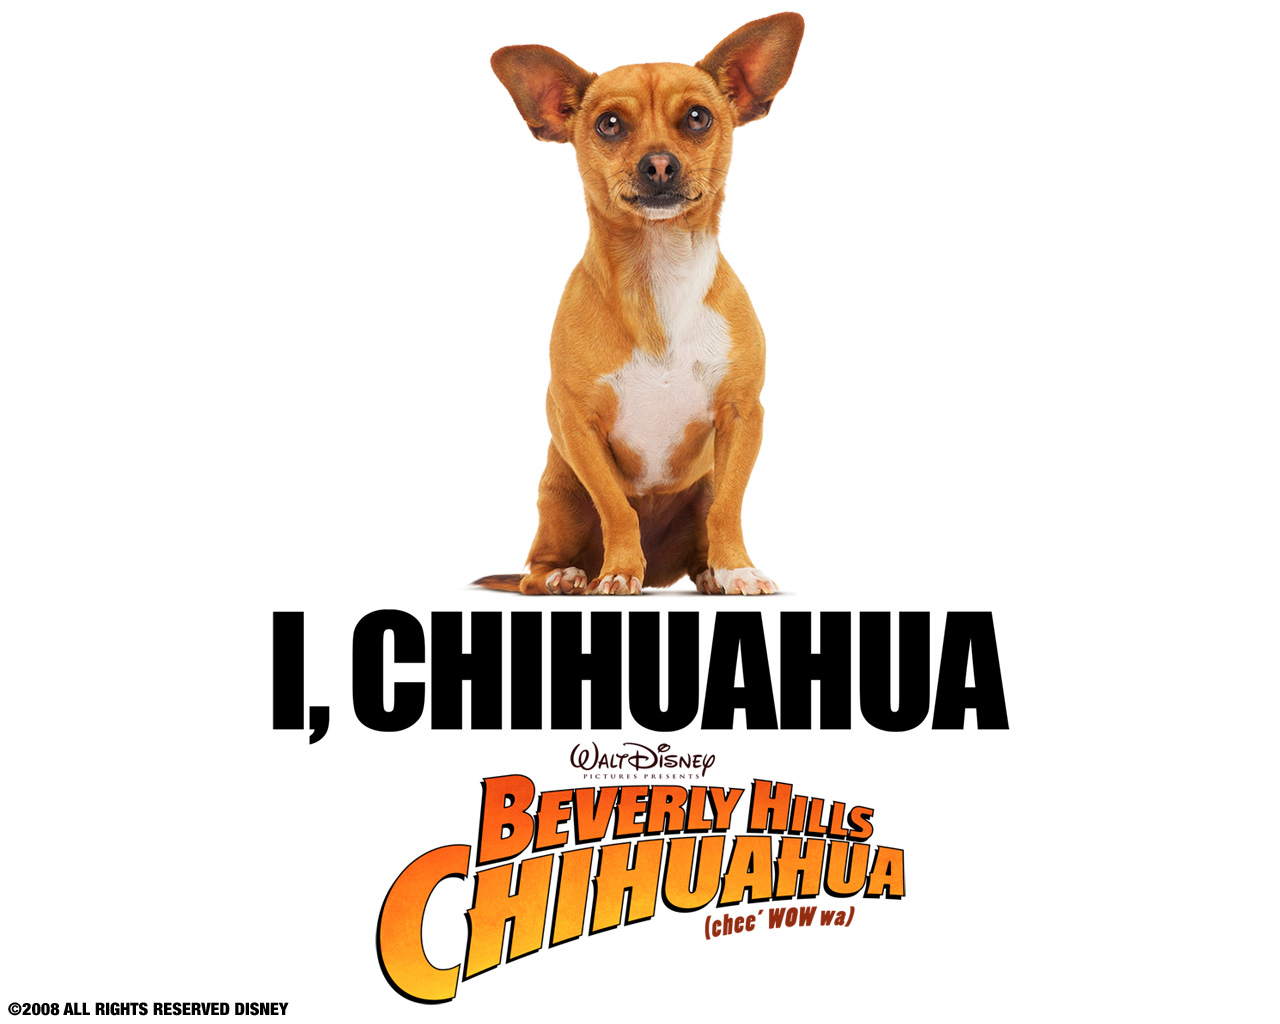 "Beverly Hills Chihuahua" desktop wallpaper (1280 x 1024 pixels)